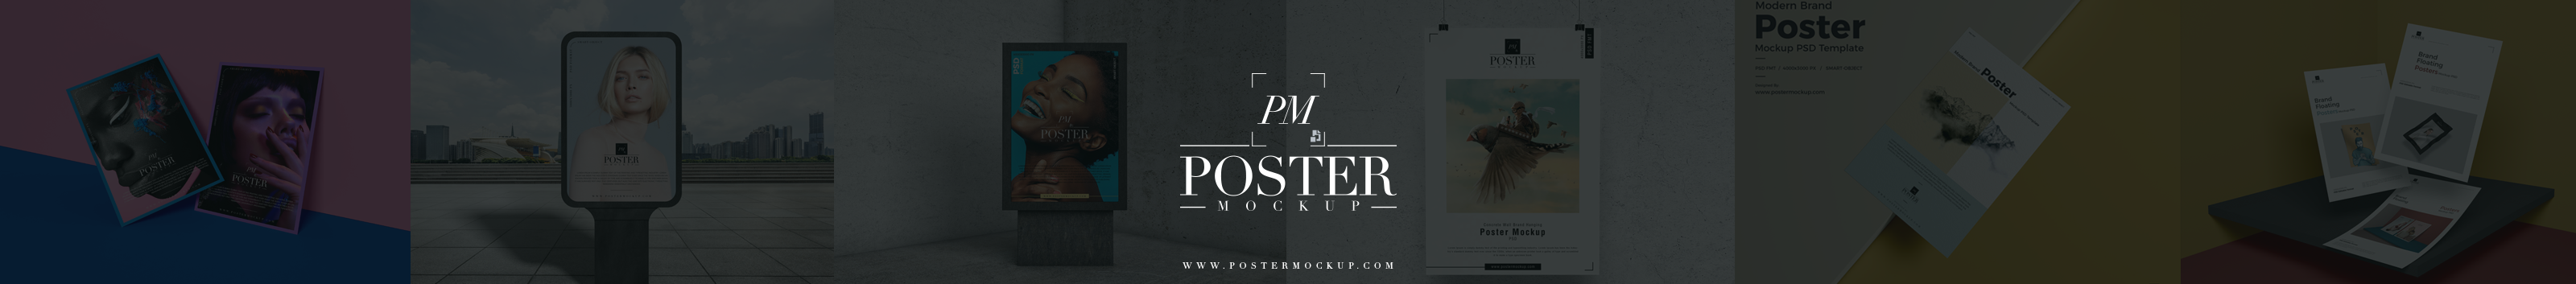 Poster Mockup's profile banner